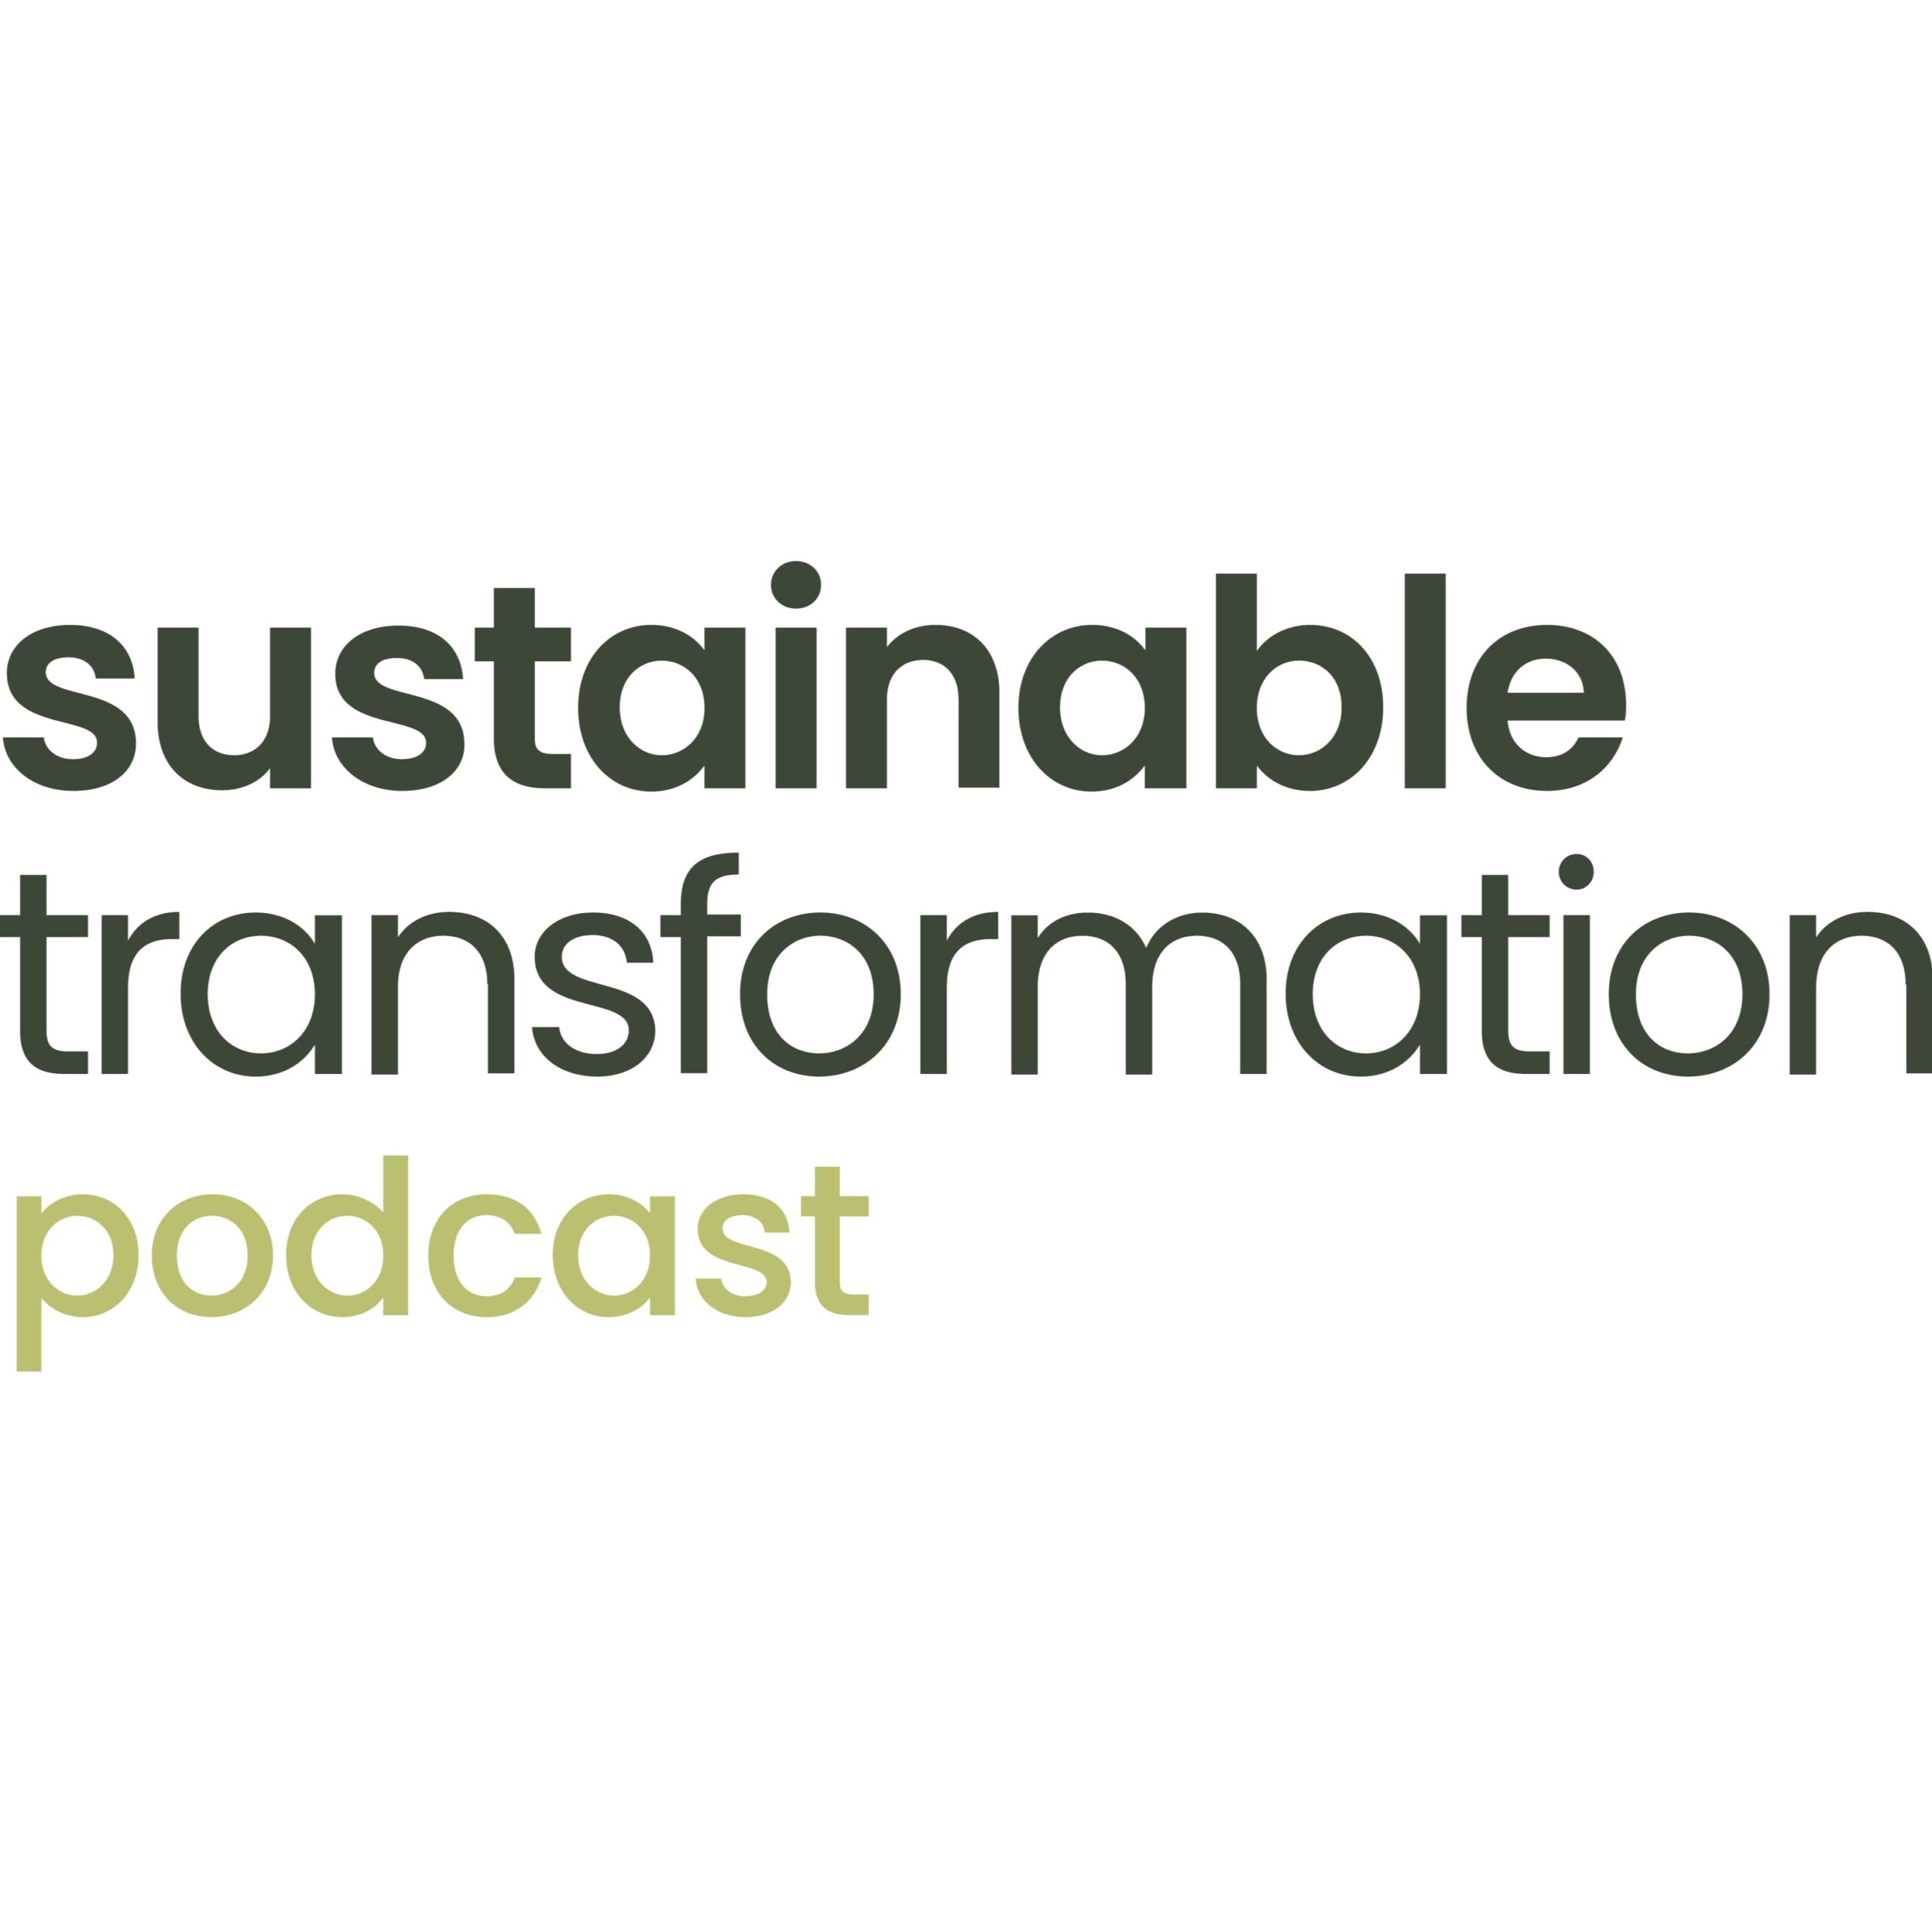 Sustainable Transformation Podcast Logo